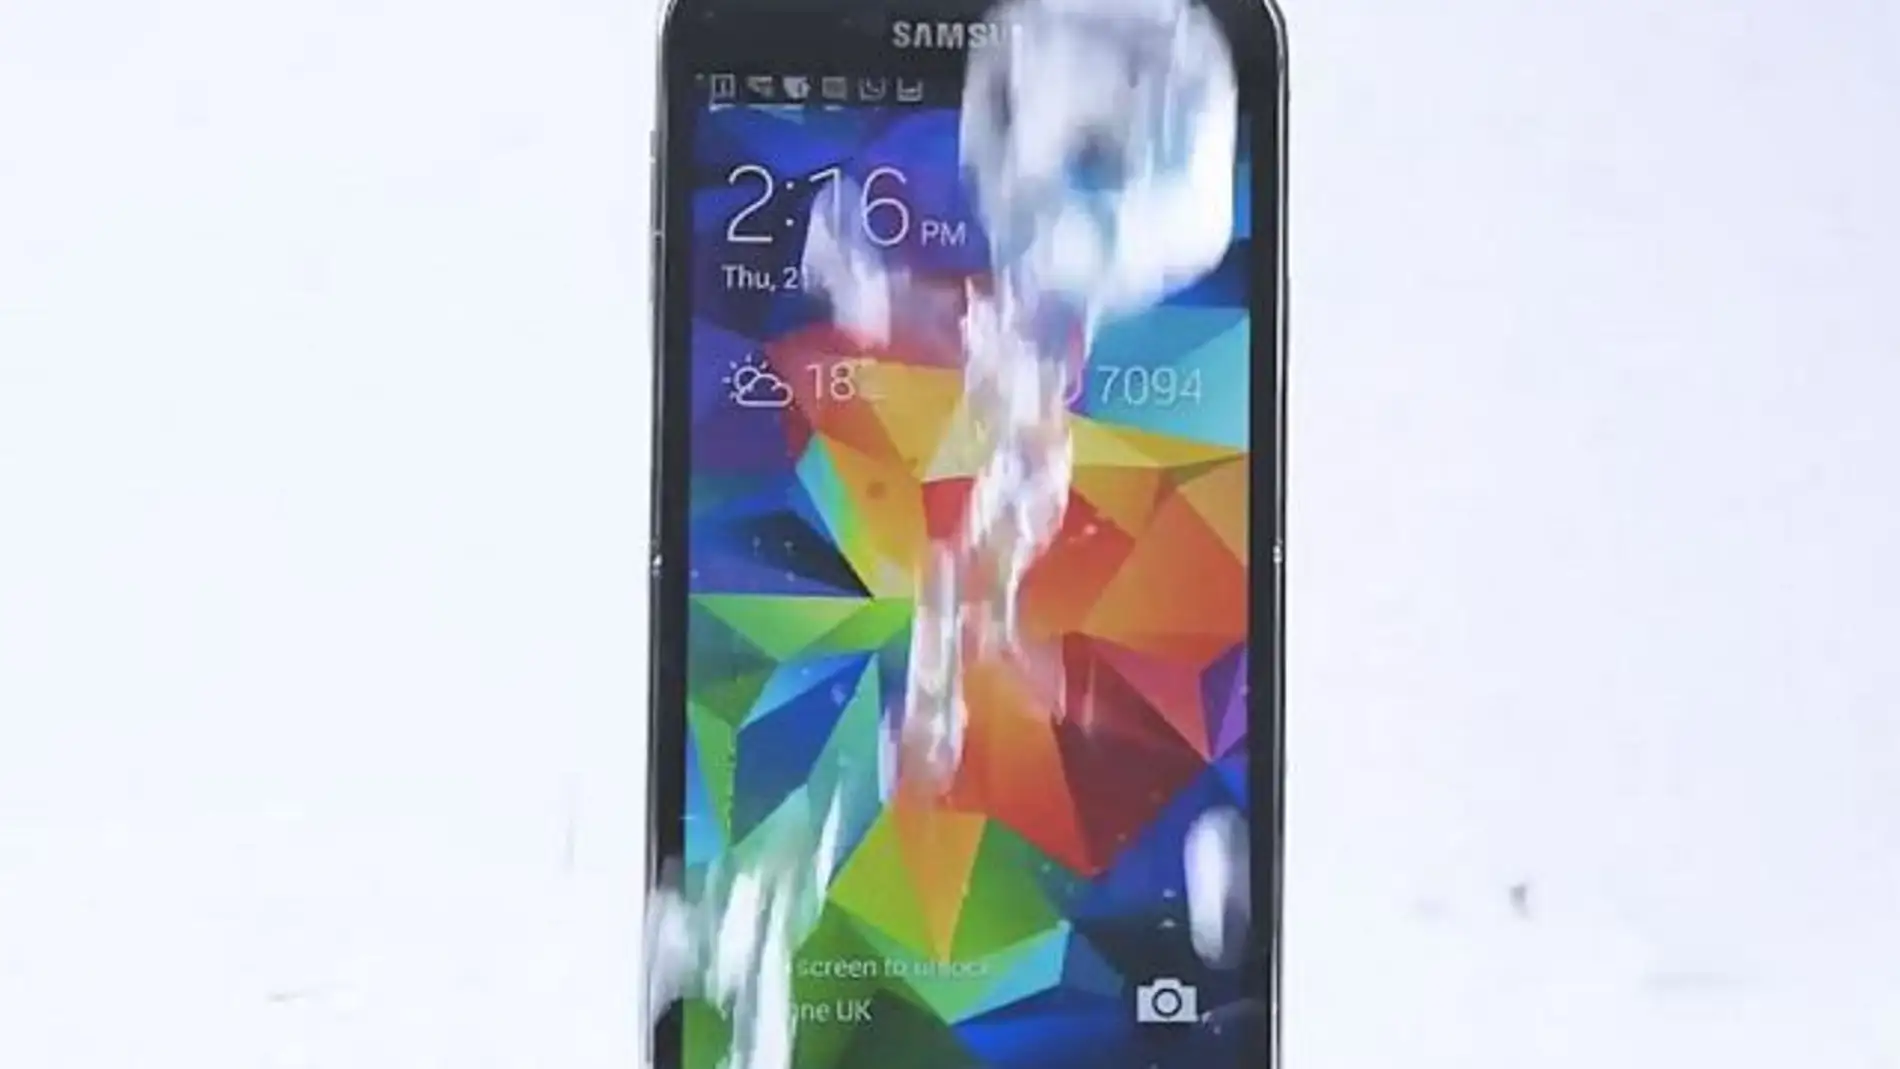 Samsung Galaxy S5 Ice Bucket Challenge